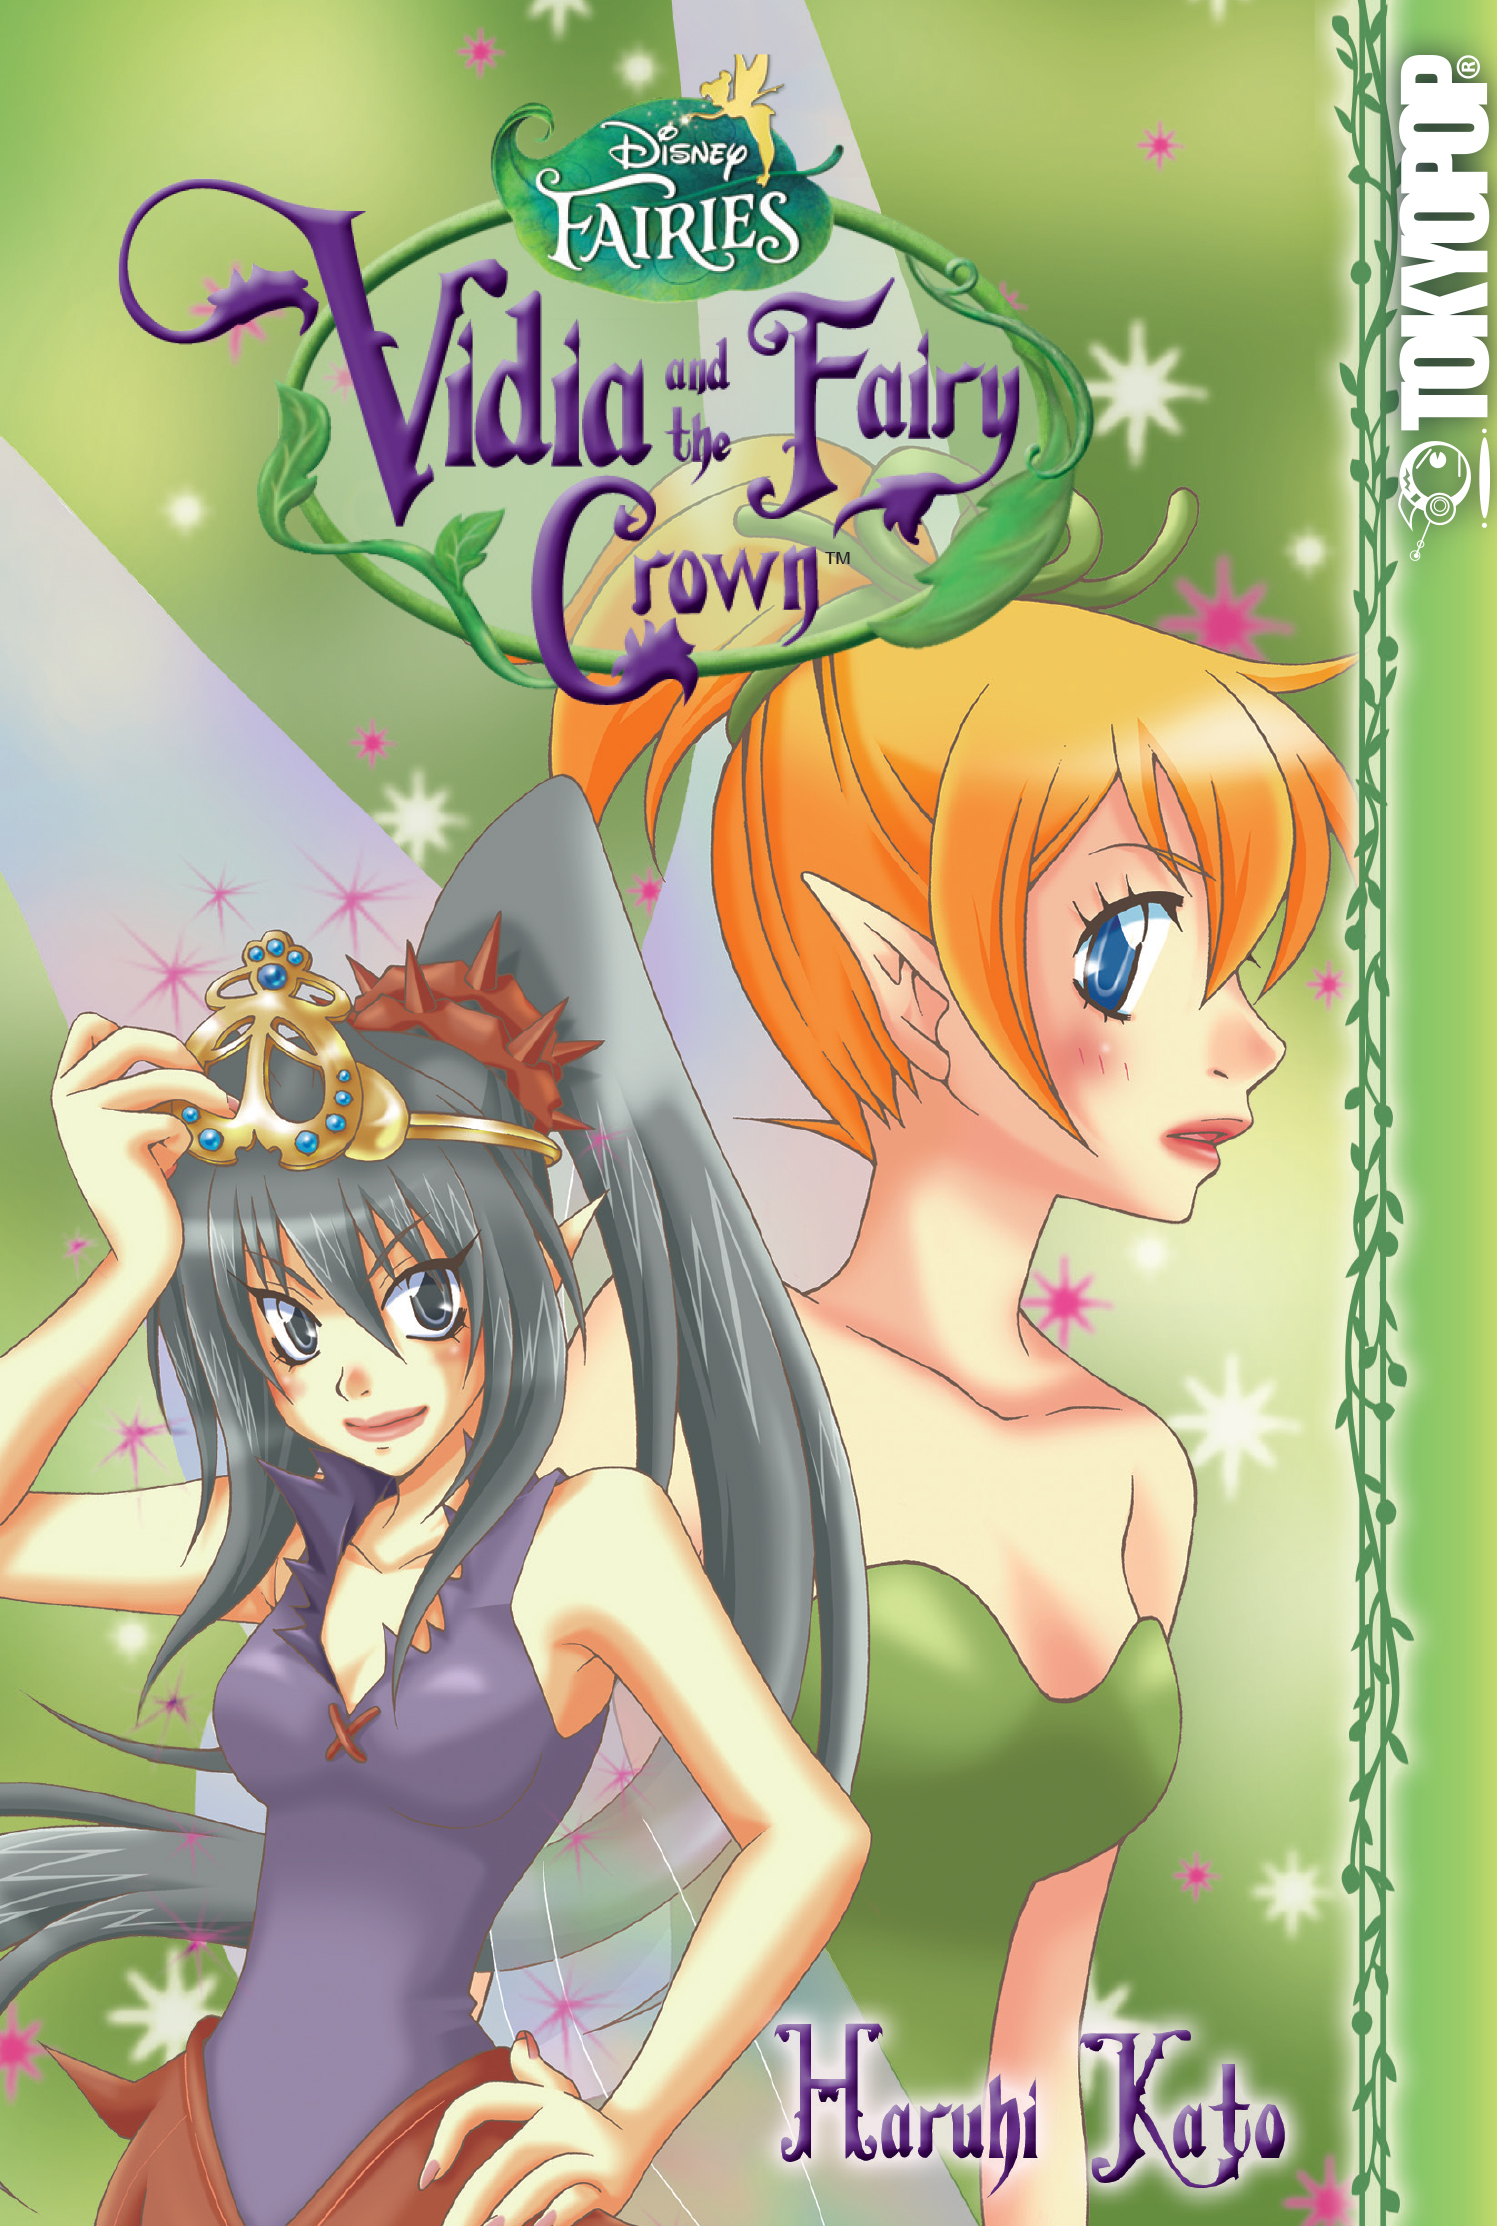 Disney Fairies Manga Manga Volume 1 Vidia & Fairy Crown